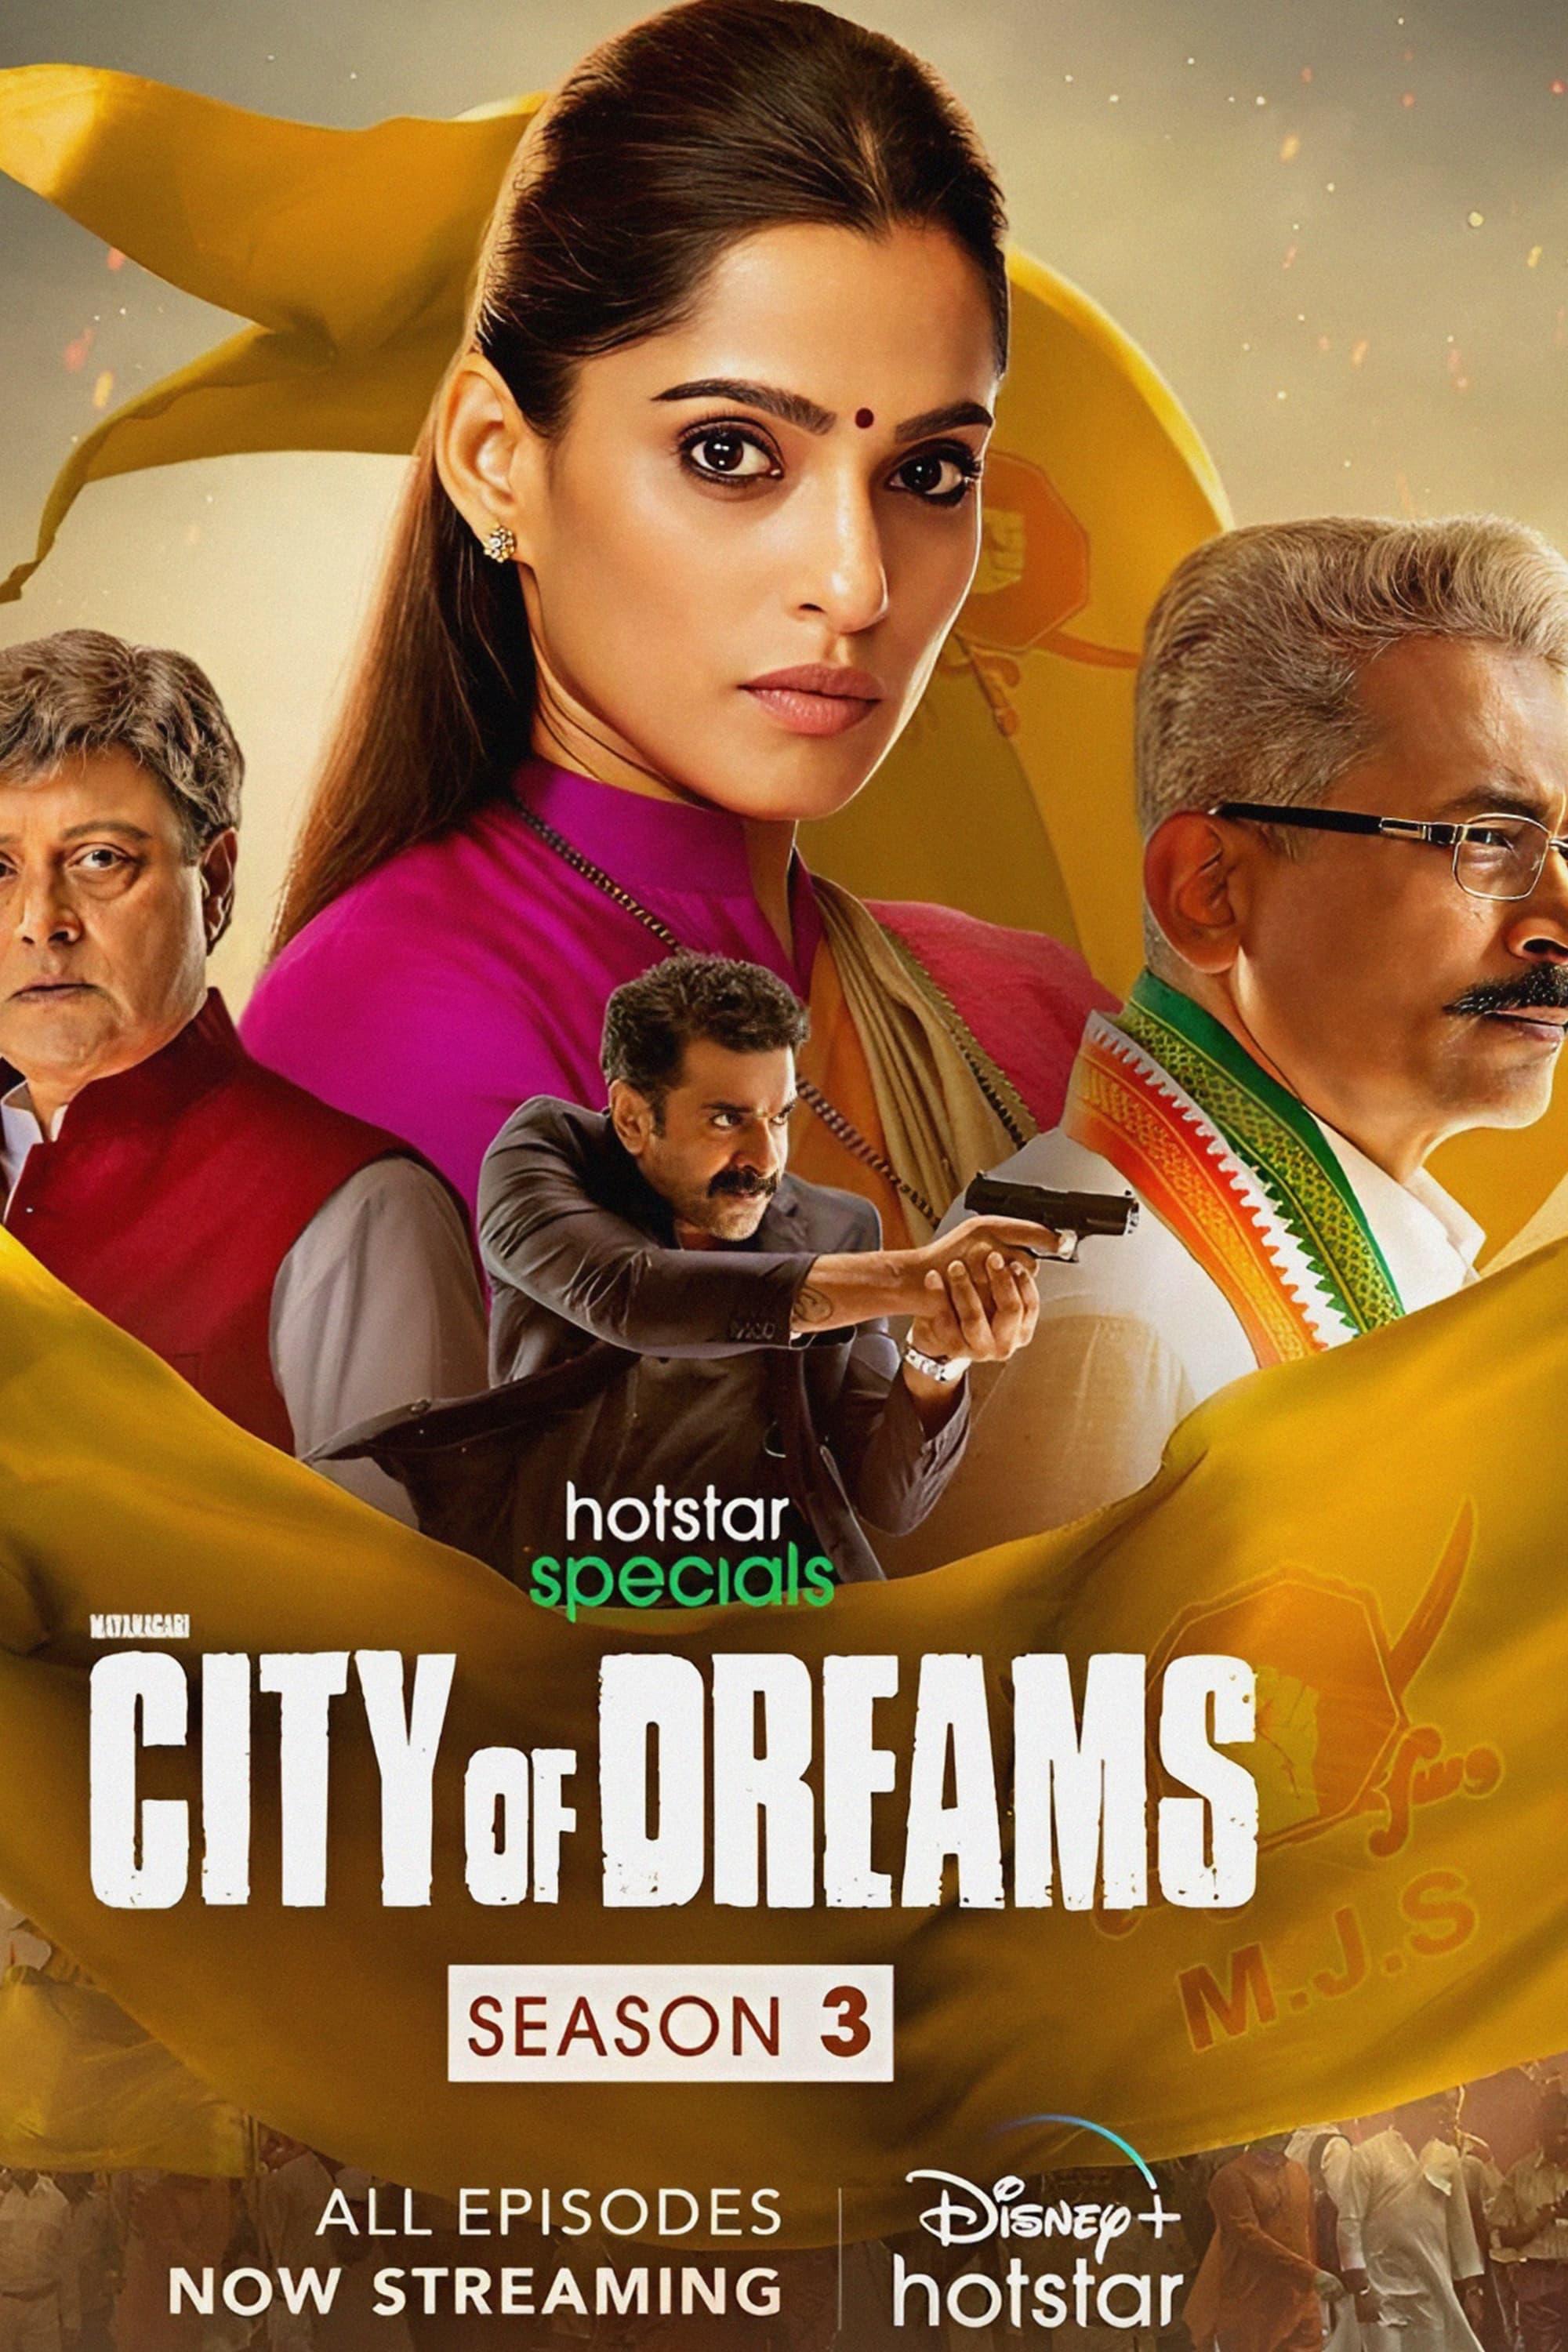 City of Dreams poster